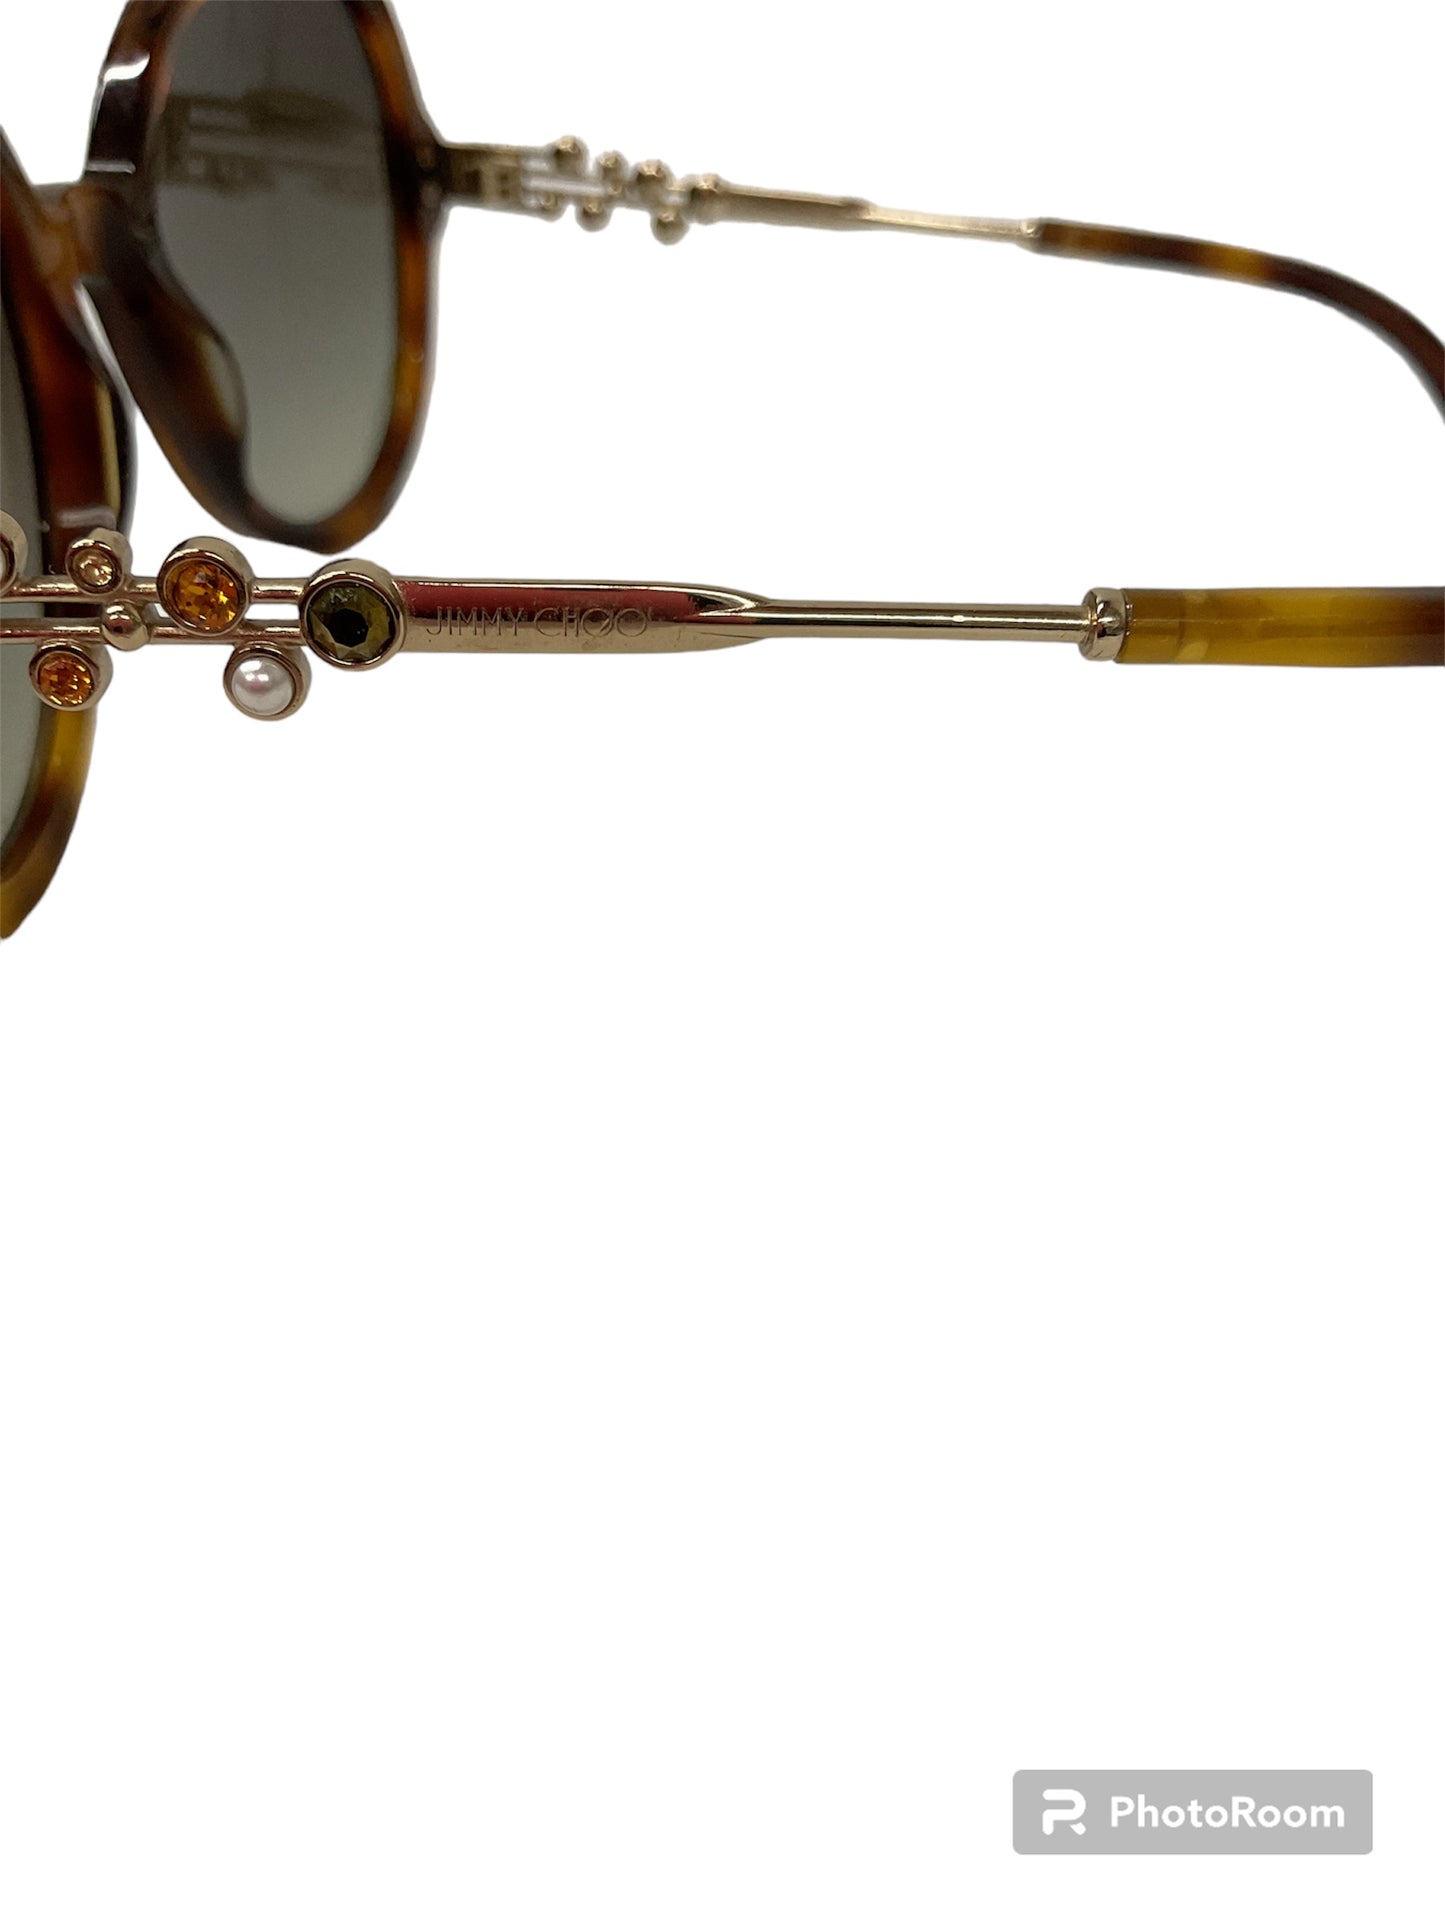 Sunglasses Luxury Designer By Jimmy Choo